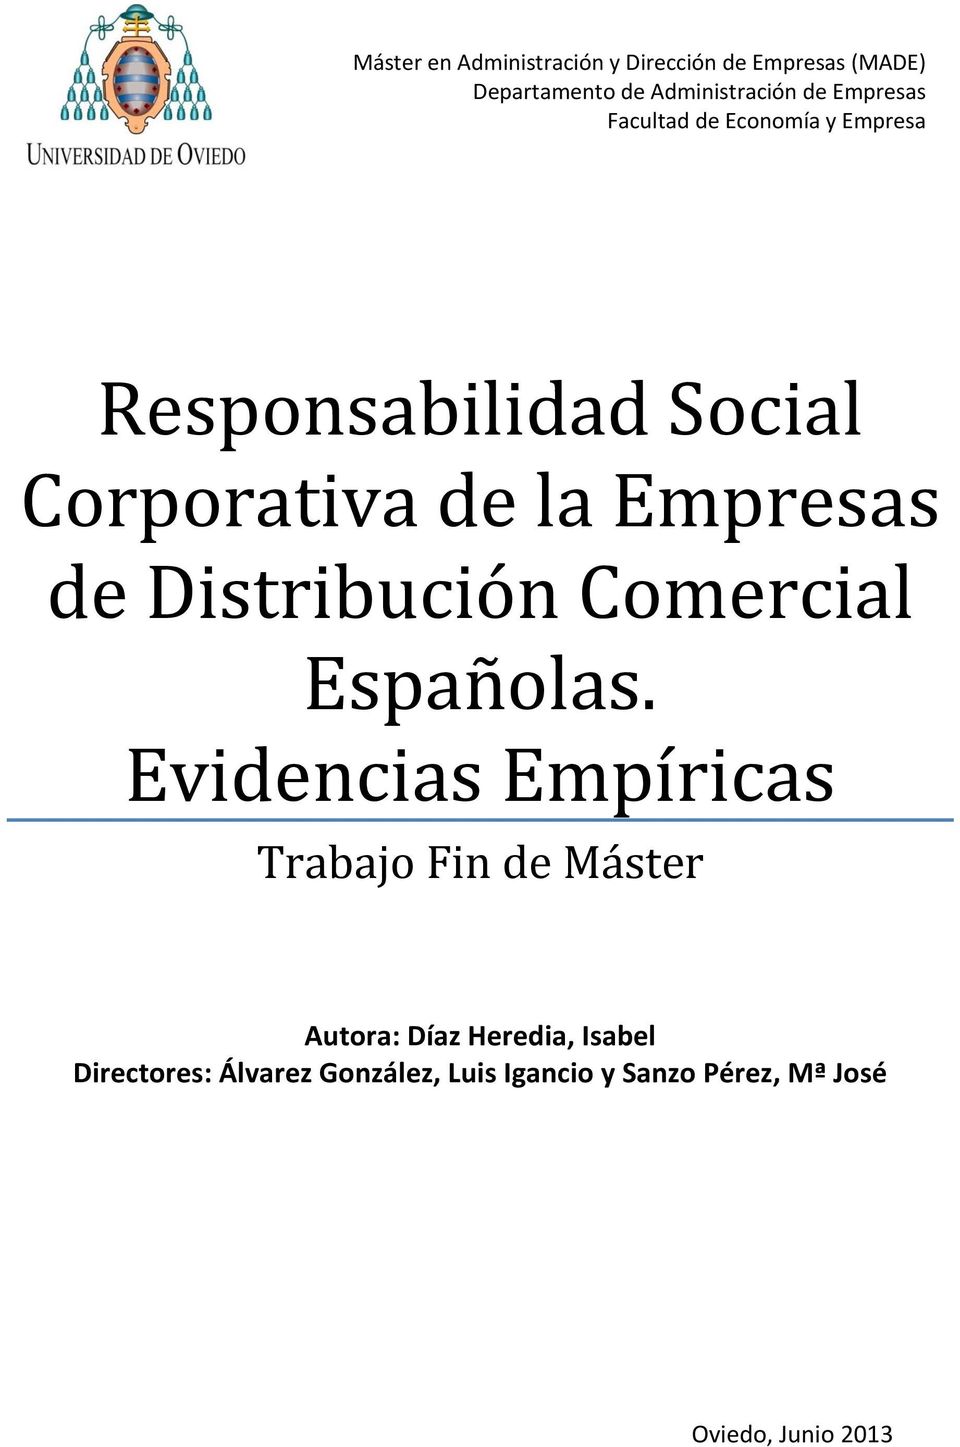 Distribución Comercial Españolas.